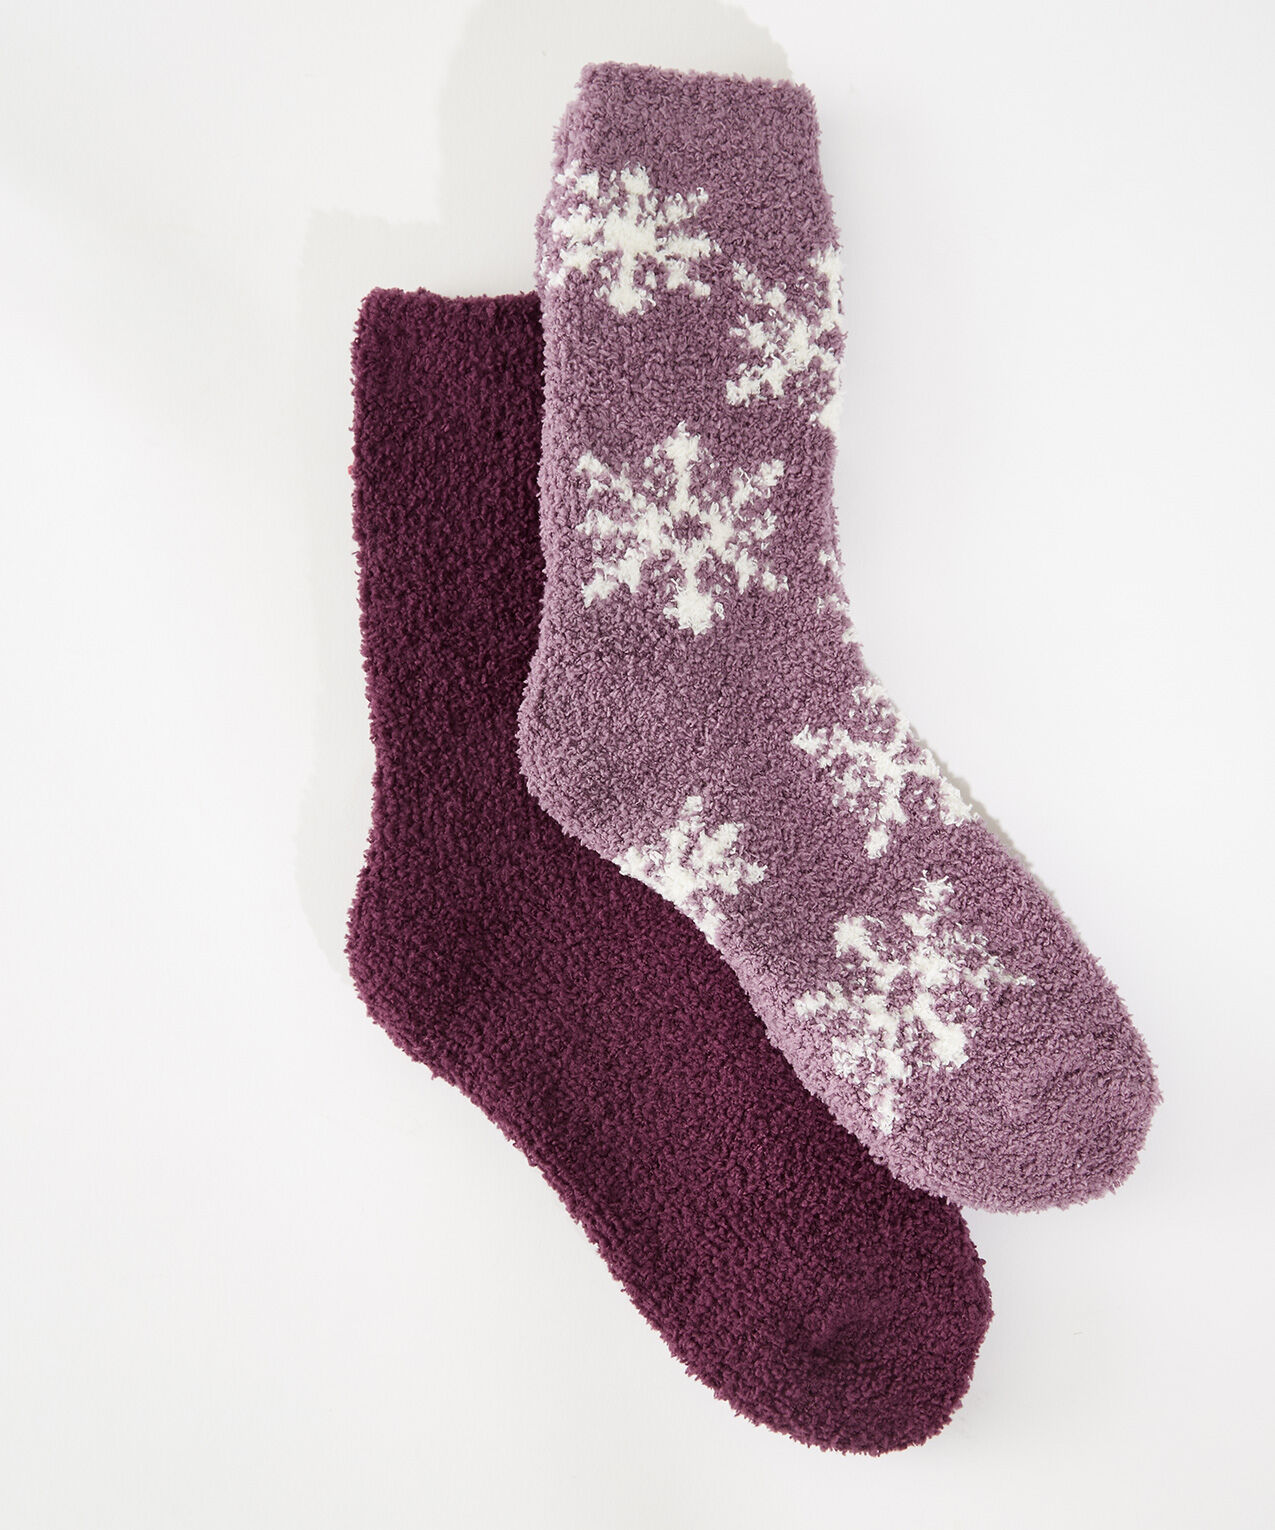 Dollarama 2PK of Thermal Outdoor Socks for Men - Case of 36